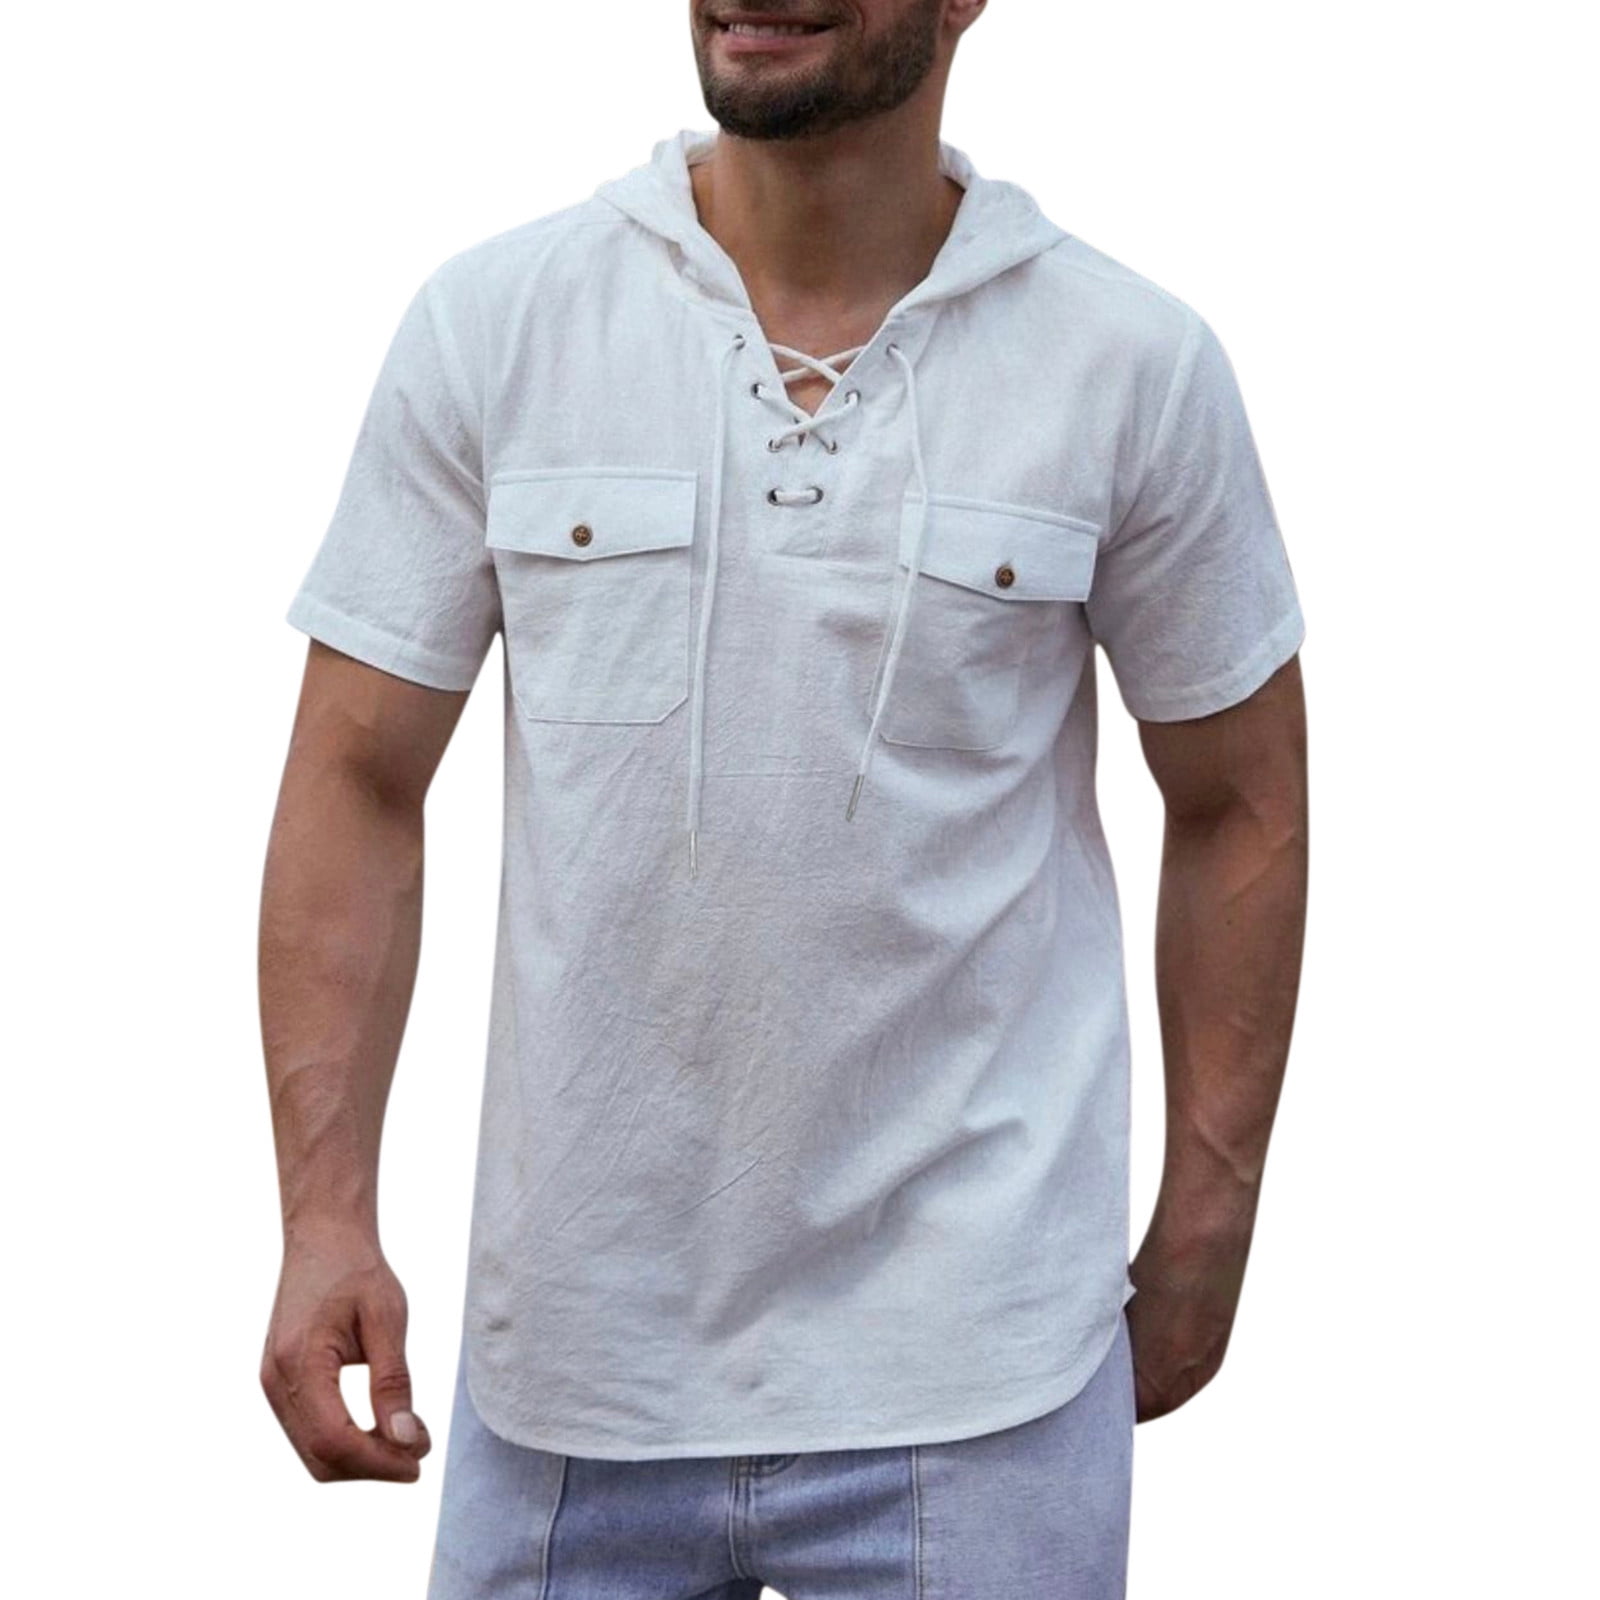 adviicd Boys Shirts Men's Fishing Shirts with Zipper Pockets UPF 50  Lightweight Cool Long Sleeve Button Down Shirts for Men Casual Hiking B L 